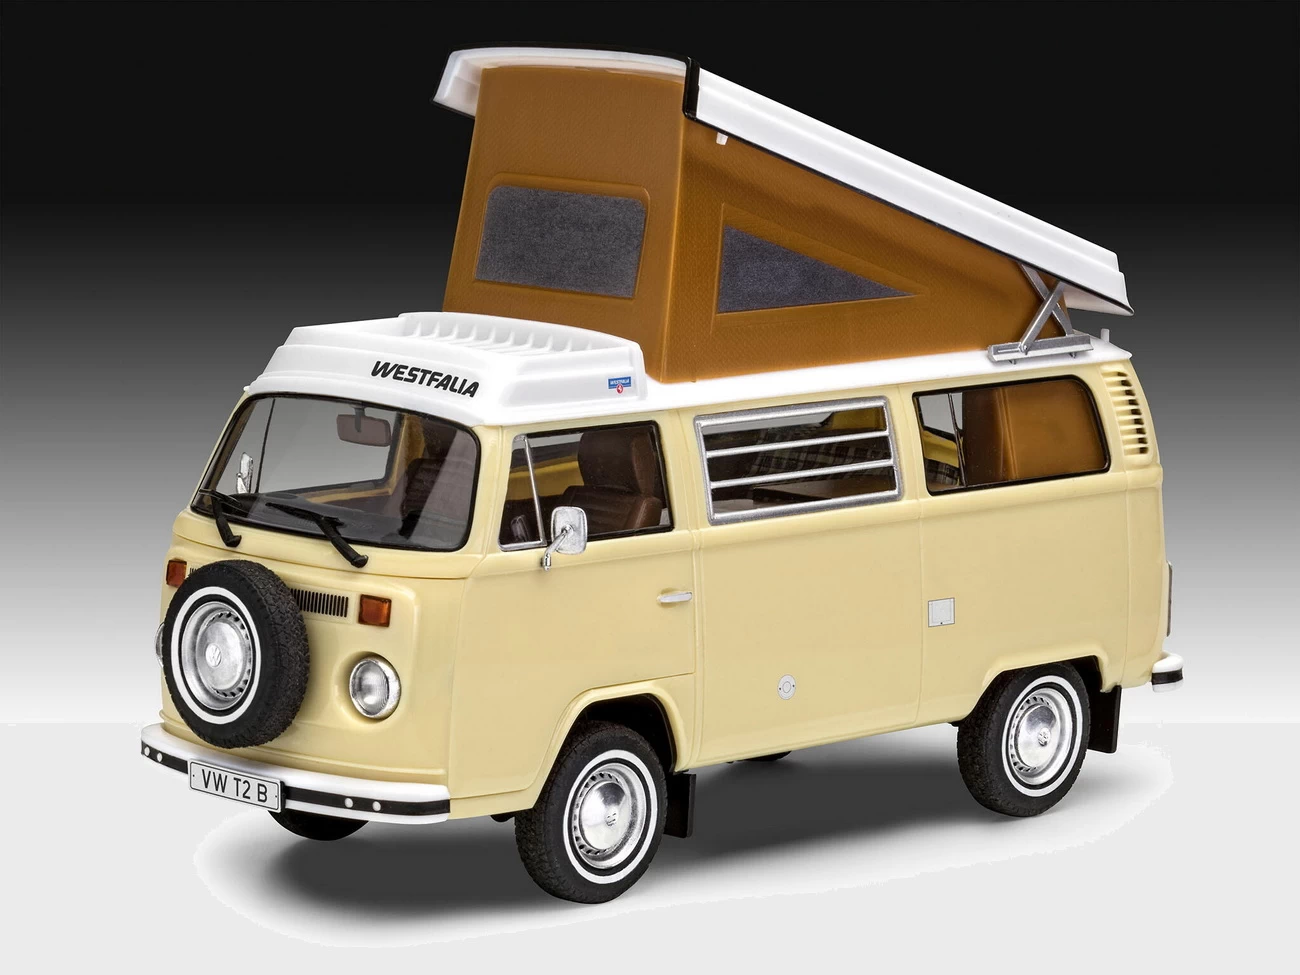 Revell 07676 - Volkswagen T2 Camper easy click